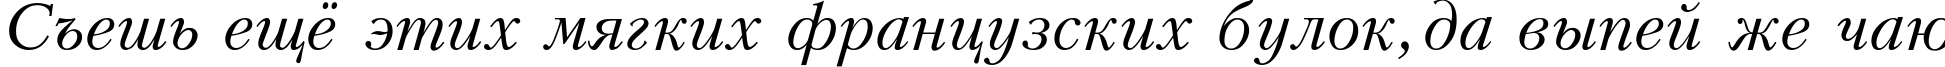 Пример написания шрифтом Kudriashov Italic текста на русском